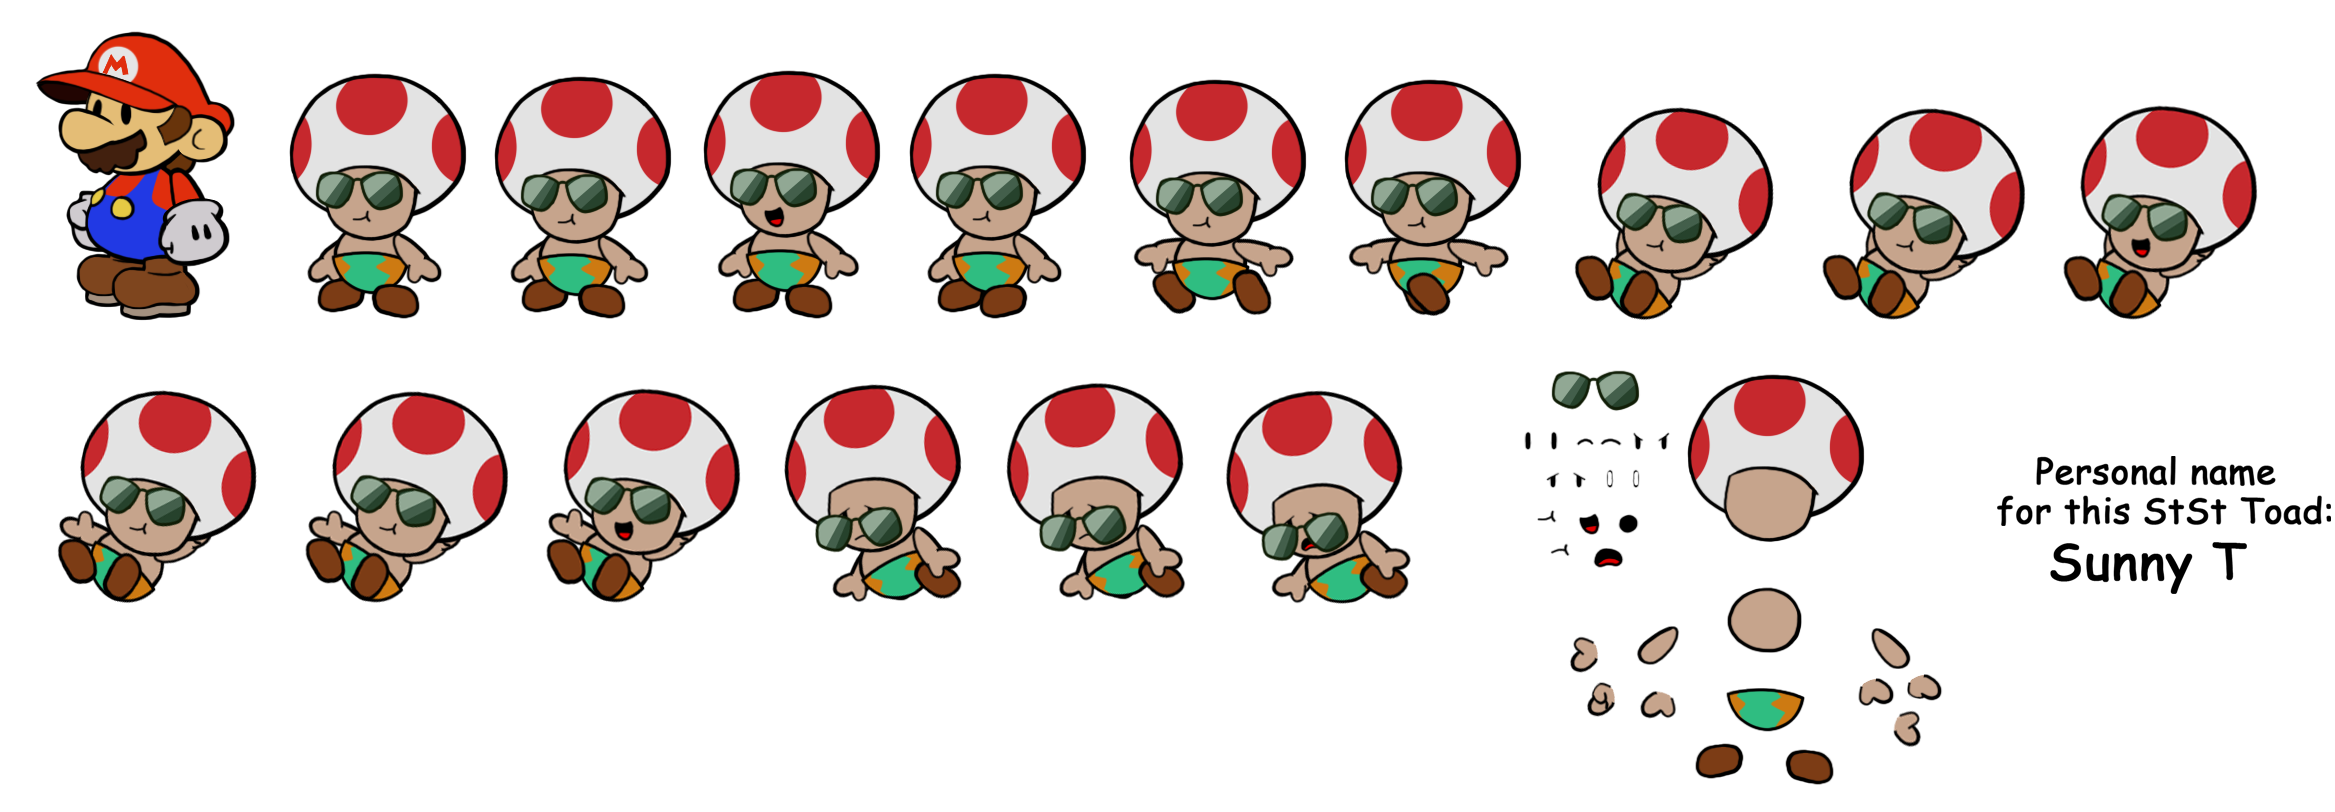 Paper Mario Customs - Oasis Toad (Paper Mario-Style)